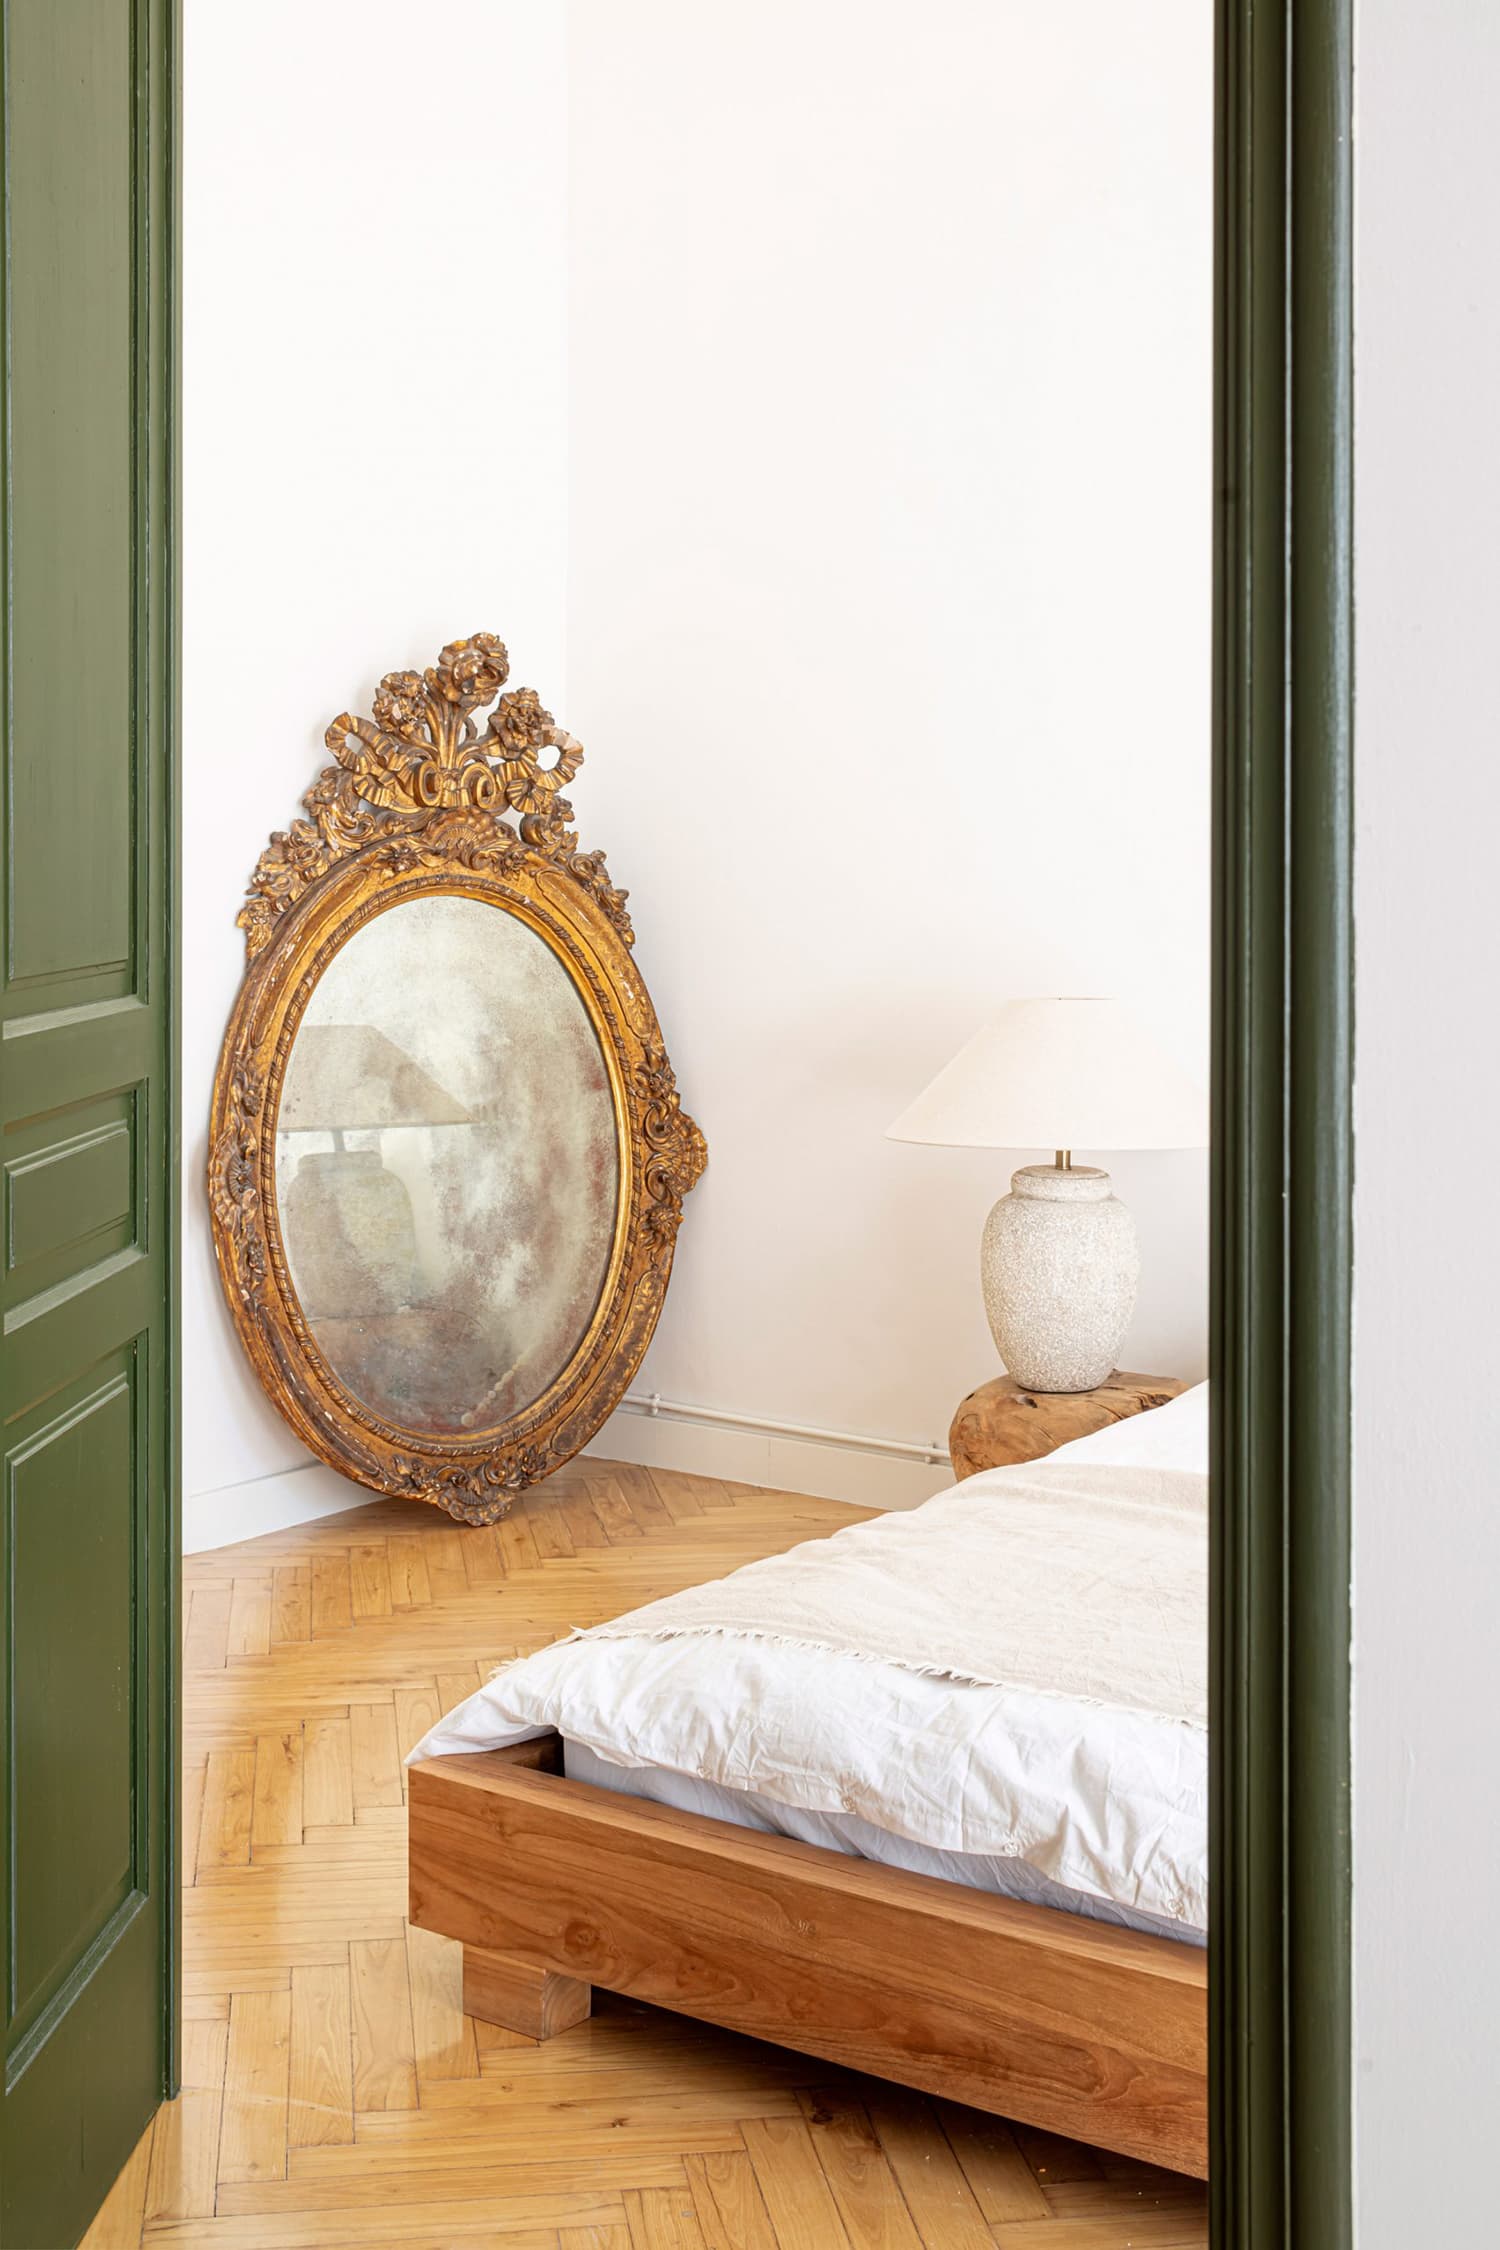 Antique gold baroque framed mirror in bedroom